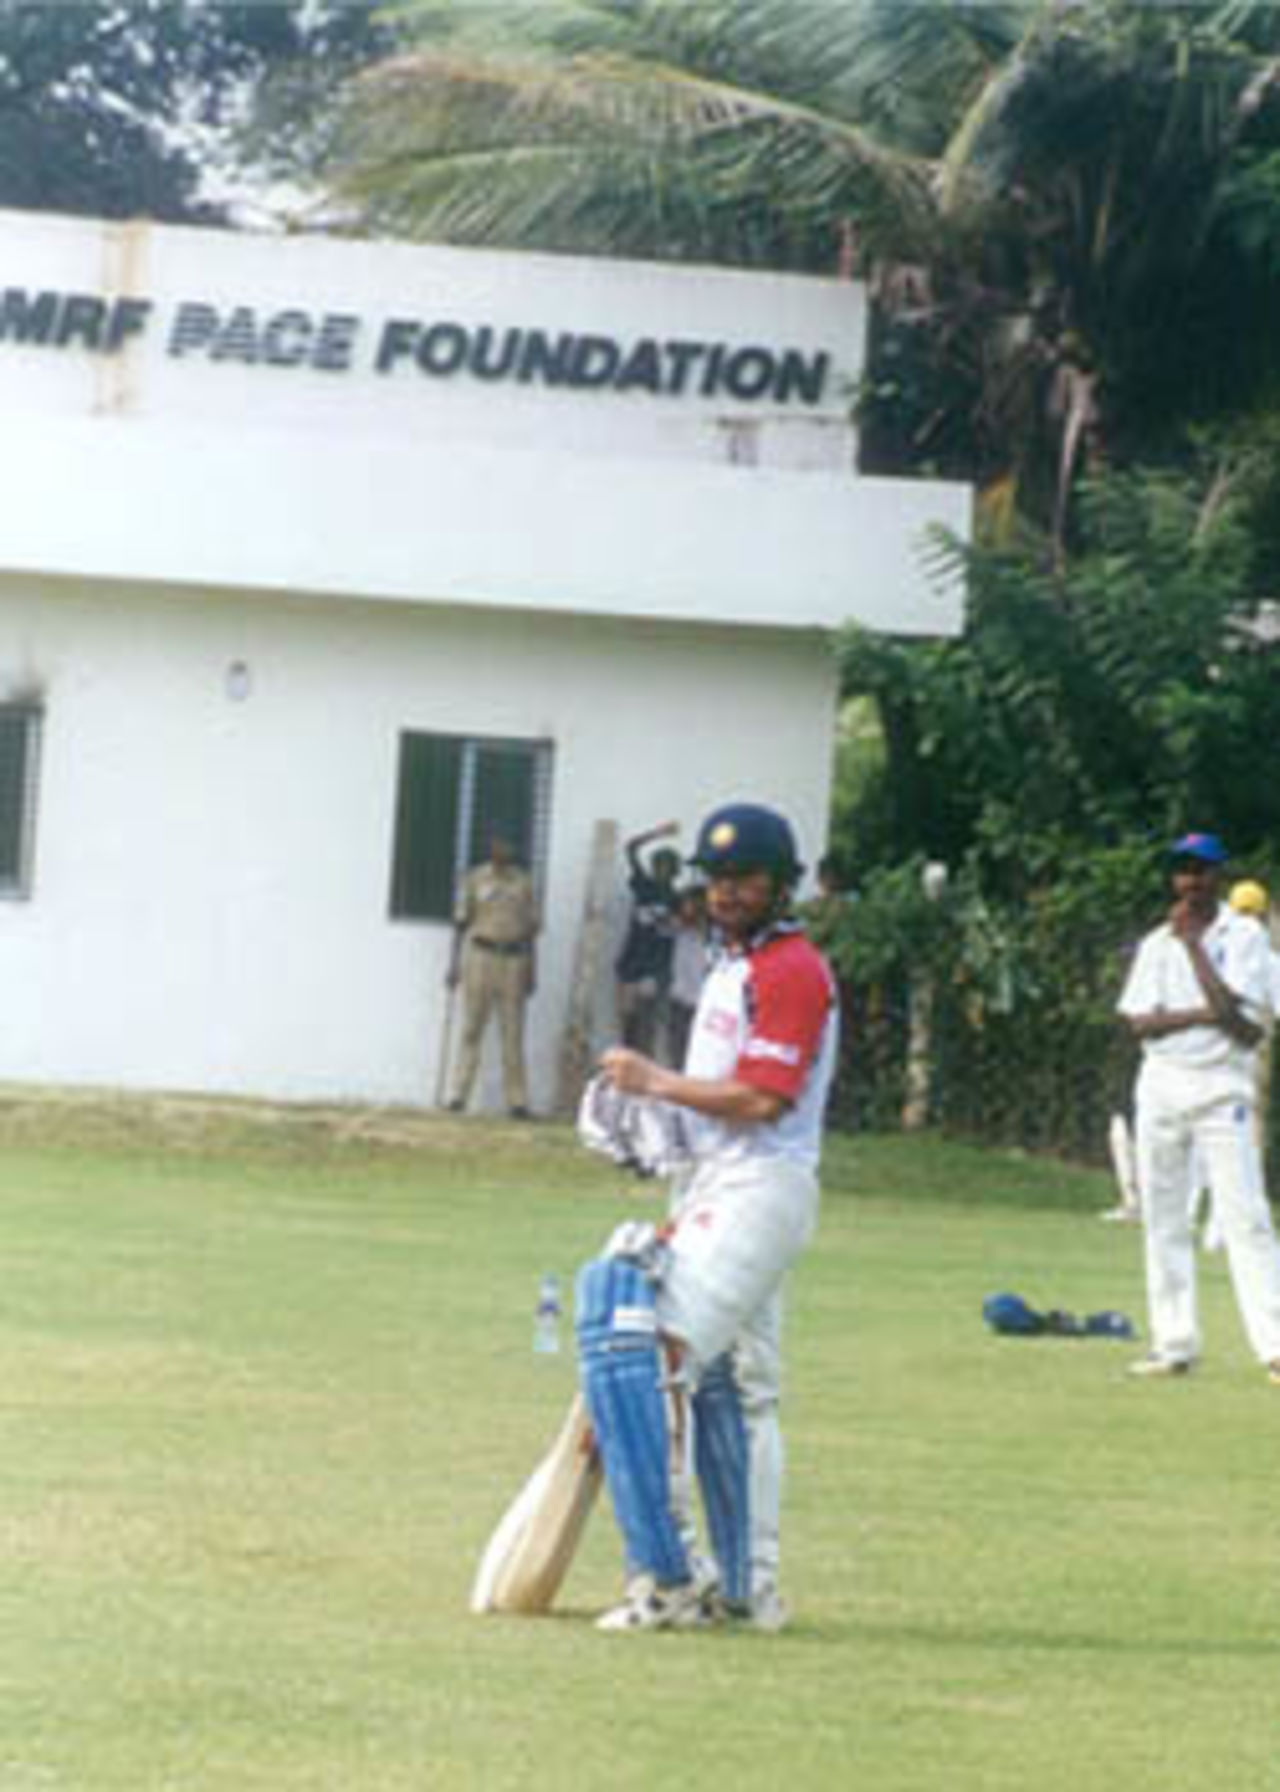 Tendulkar awaiting his turn at the nets at the MRF pace foundation, MRF Pace Foundation, Chennai, 14 Sep 2000.